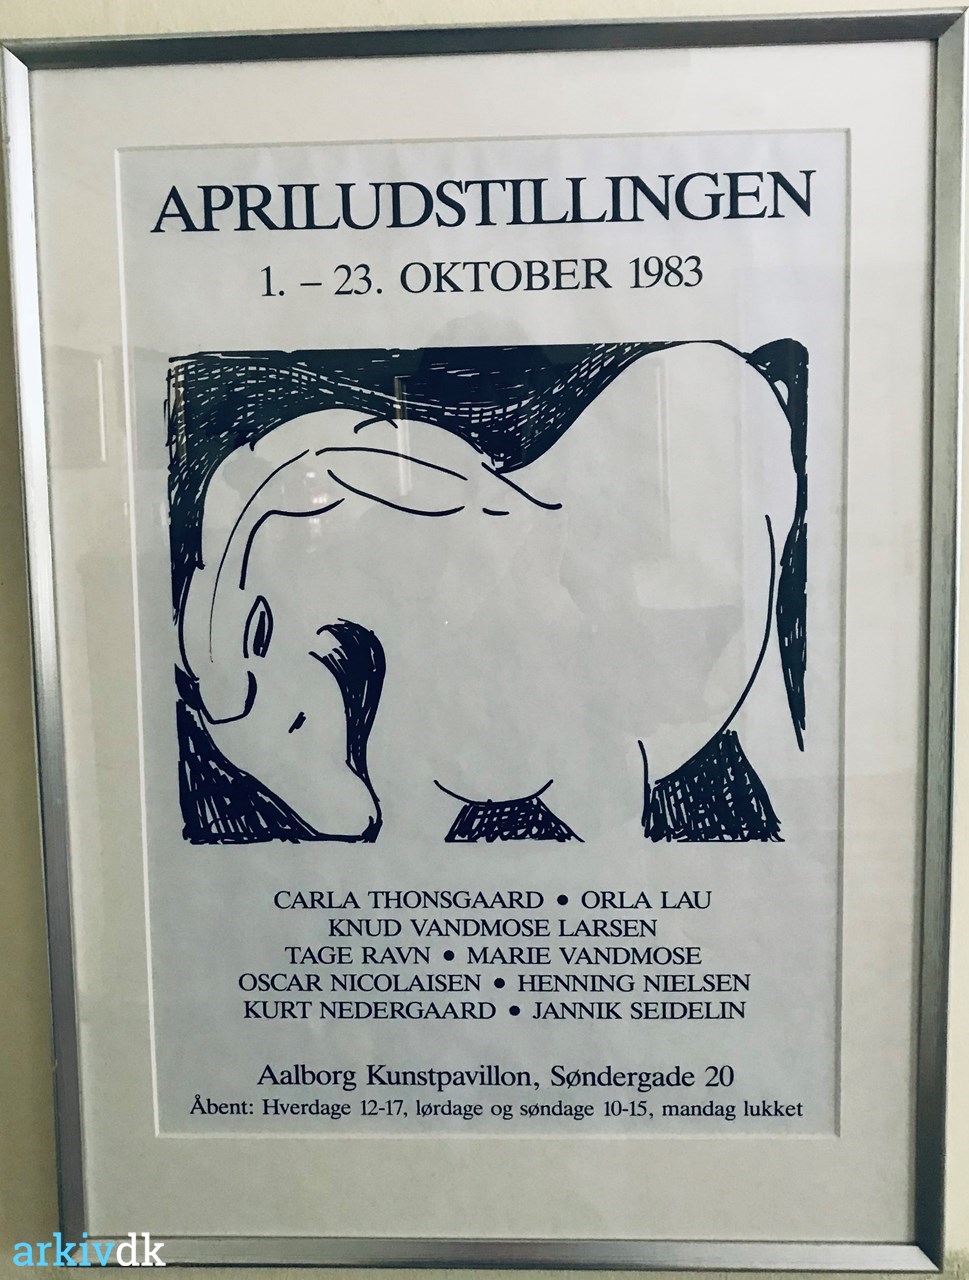 arkiv.dk | Plakat Apriludstillingen 1. - 23. oktober 1983 på Aalborg Kunstpavillon, Søndergade 20, Aalborg